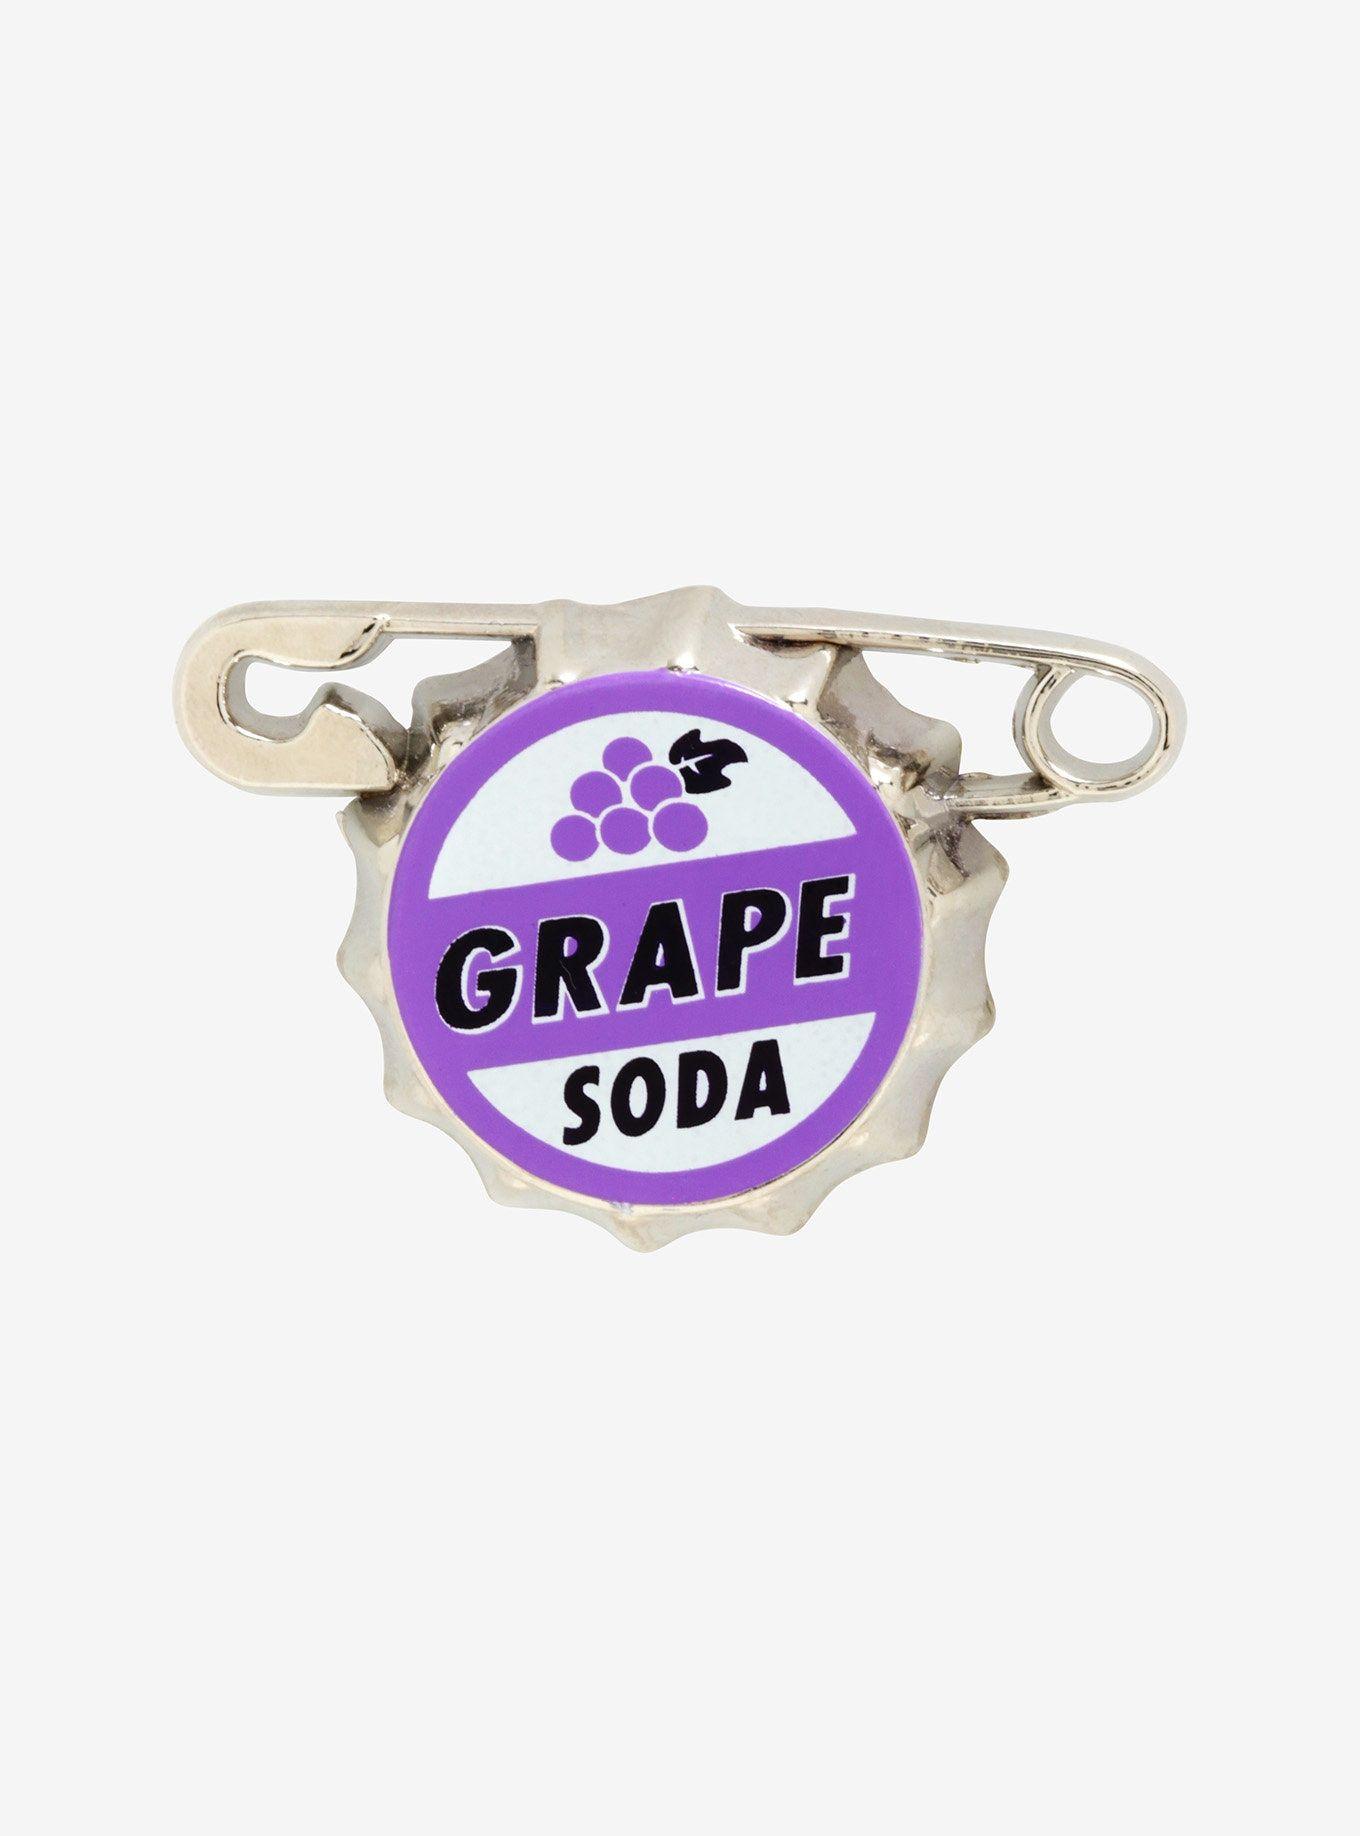 Disney Pixar Up Logo - Disney Pixar Up Grape Soda Enamel Pin